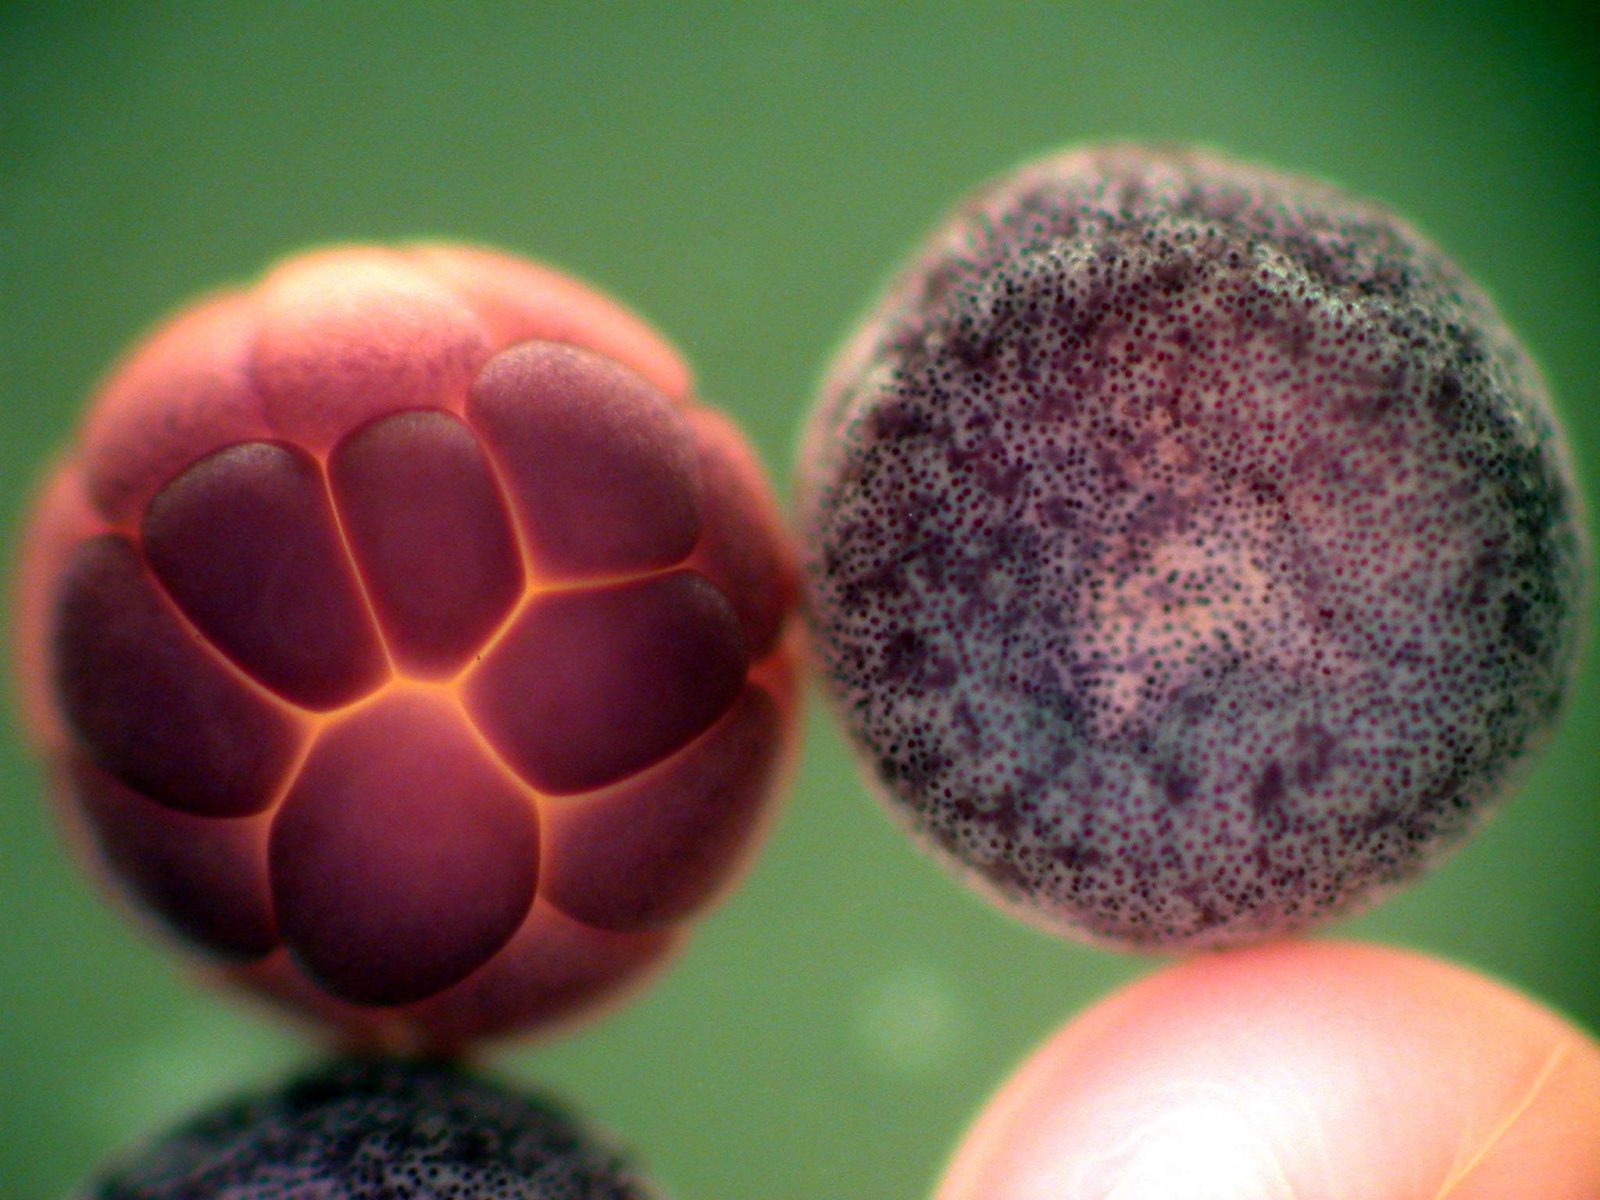 xenopus embryos photography